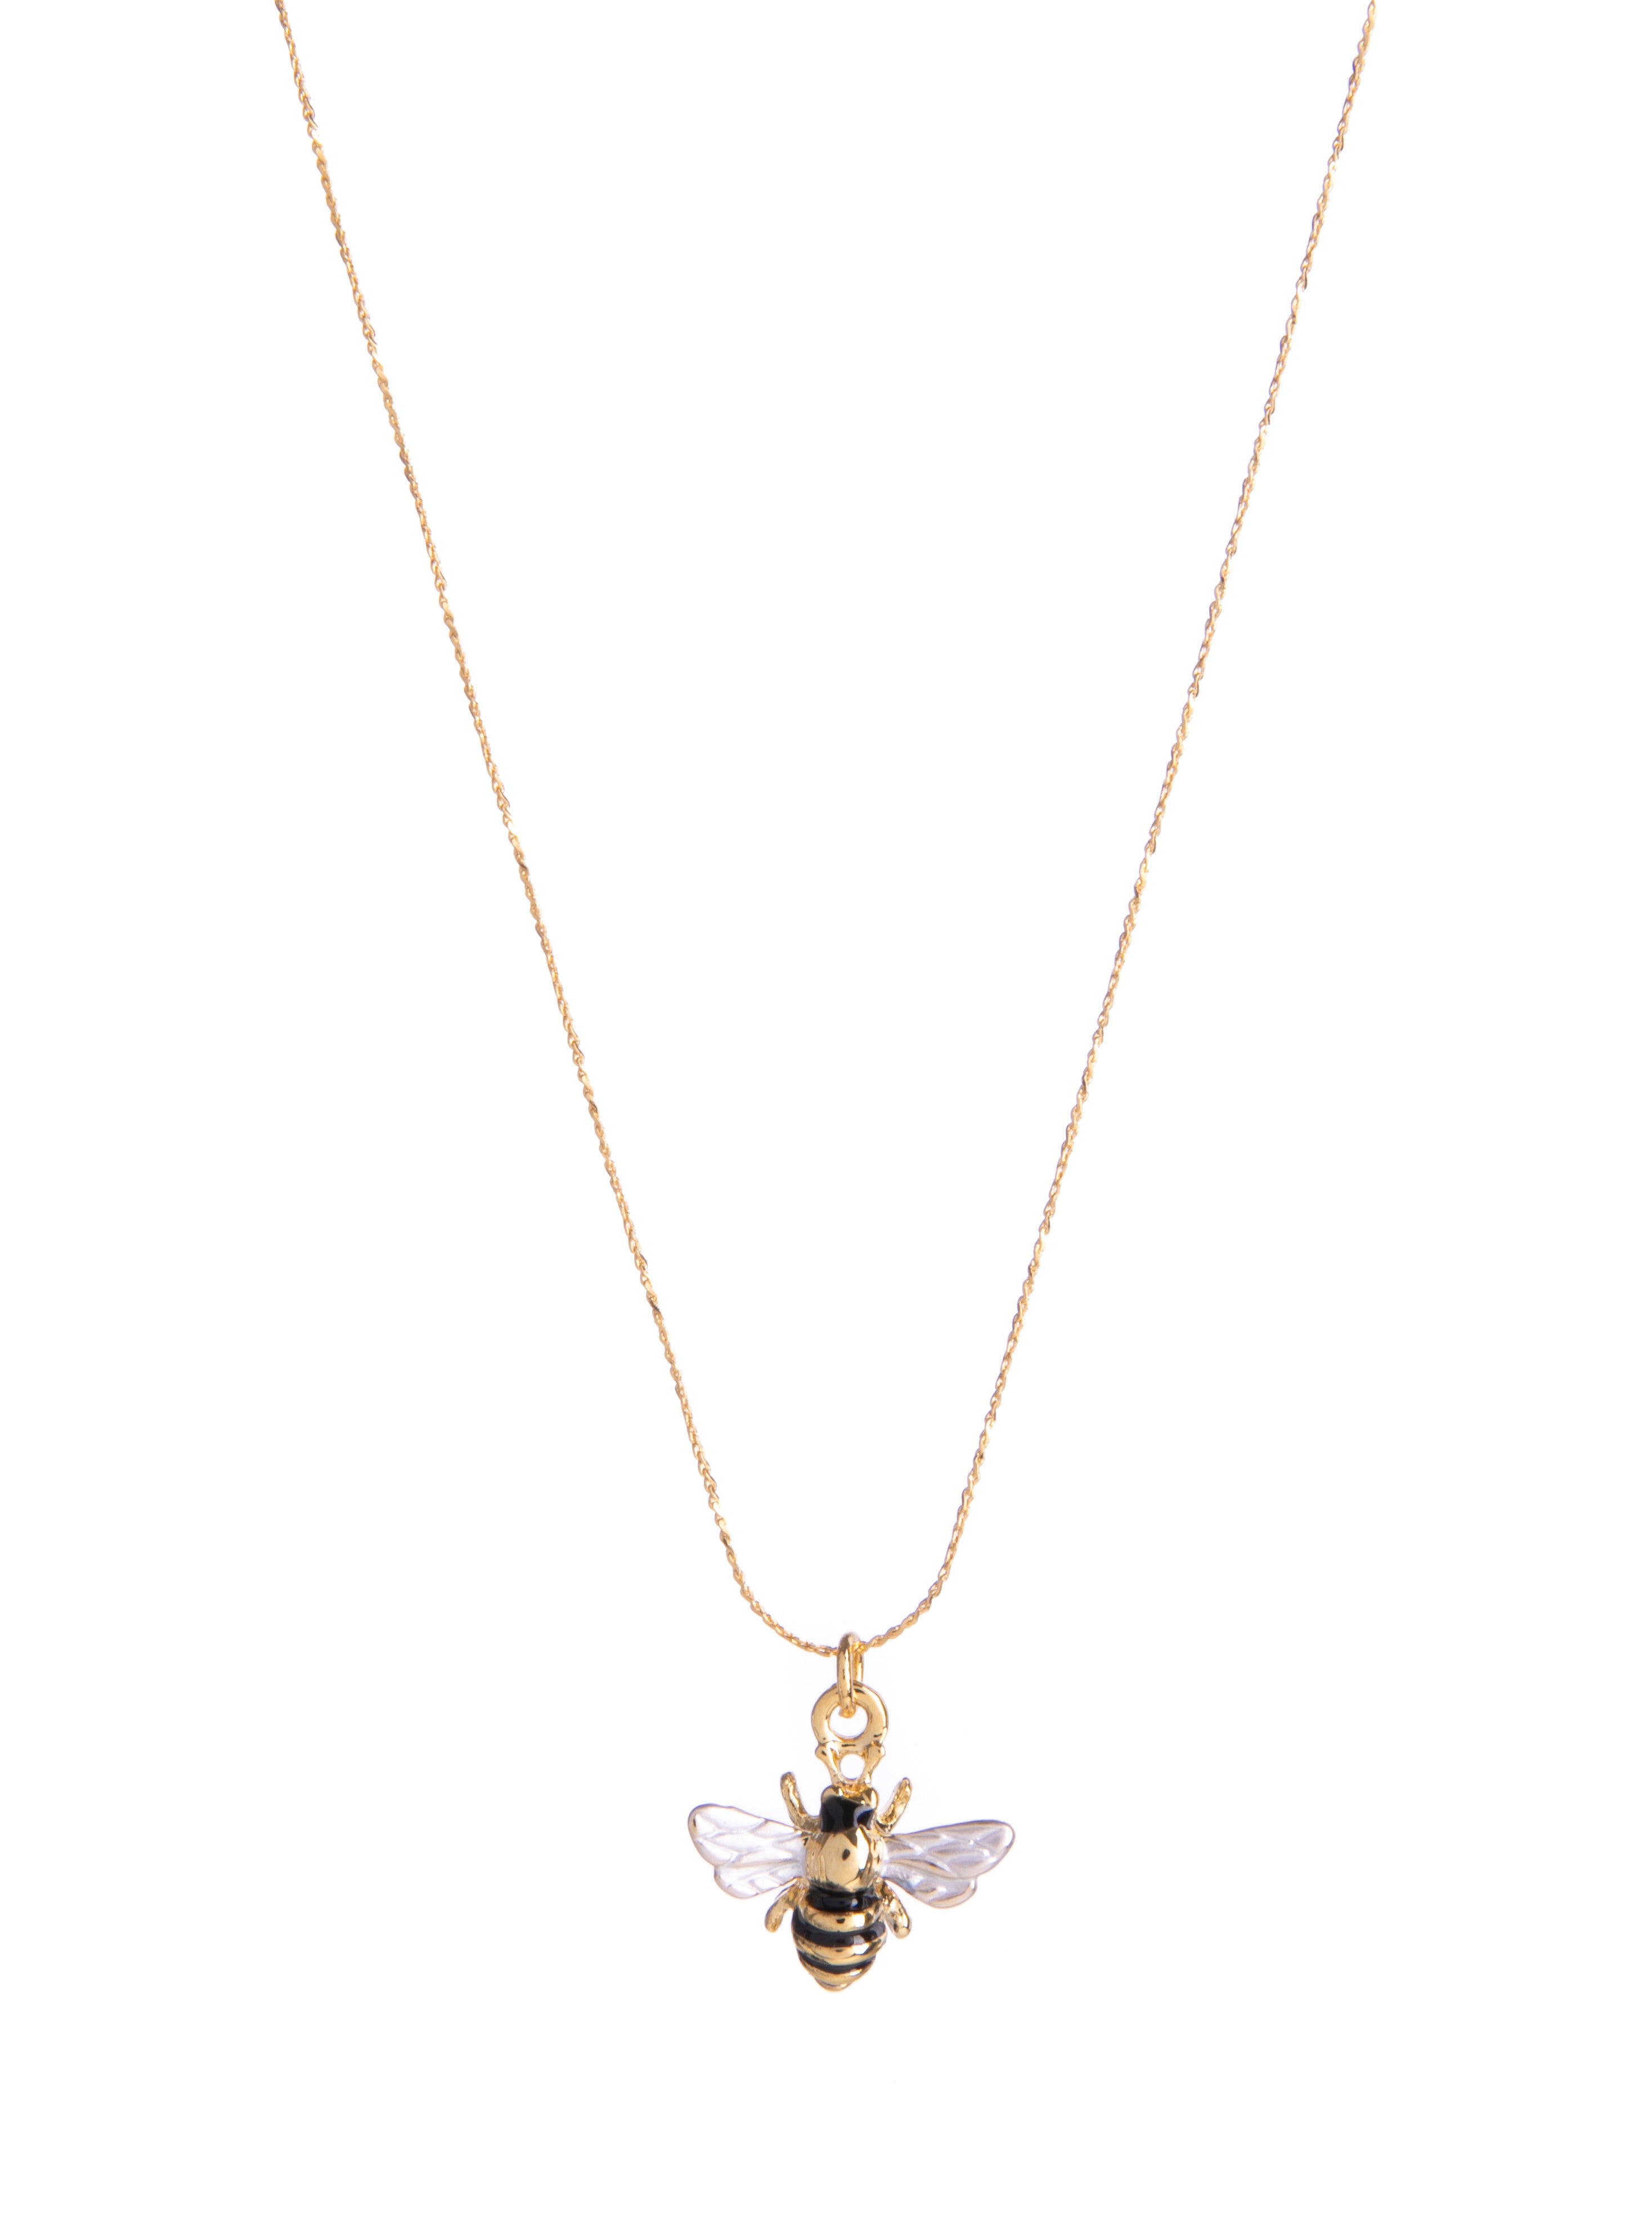 Swarovski Enameled Bumble Bee Necklace | Bee necklace, Bumble bee necklace,  Swarovski